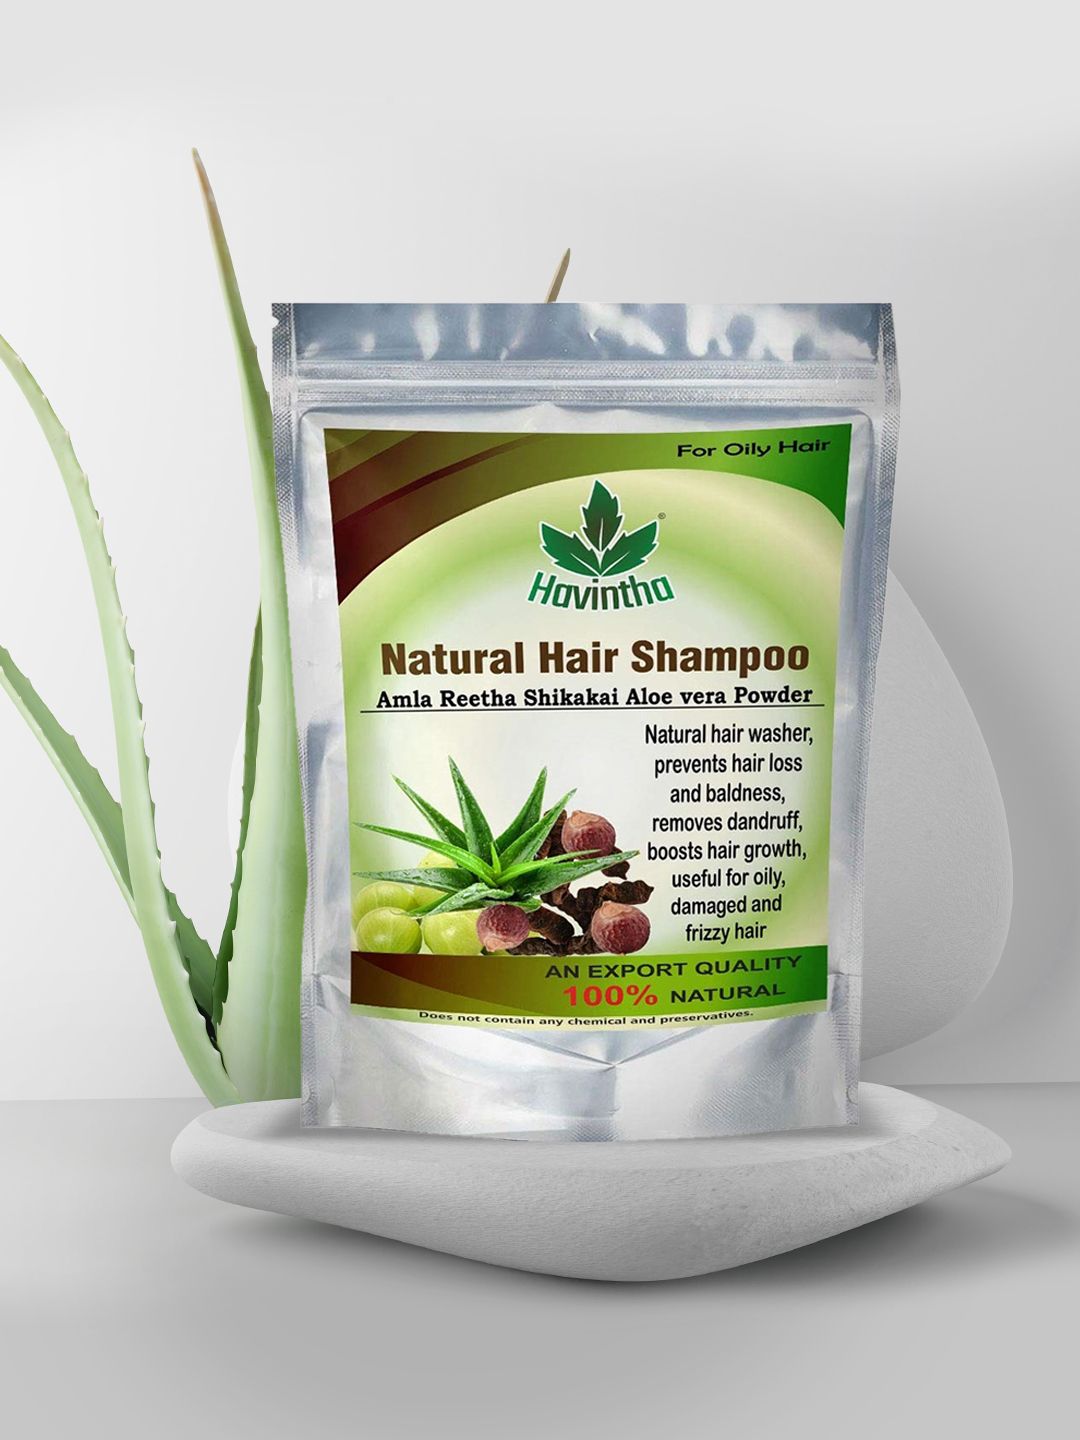 Havintha Natural Amla Reetha Shikakai & Aloevera Powder Shampoo for Oily Hair - 227 g Price in India